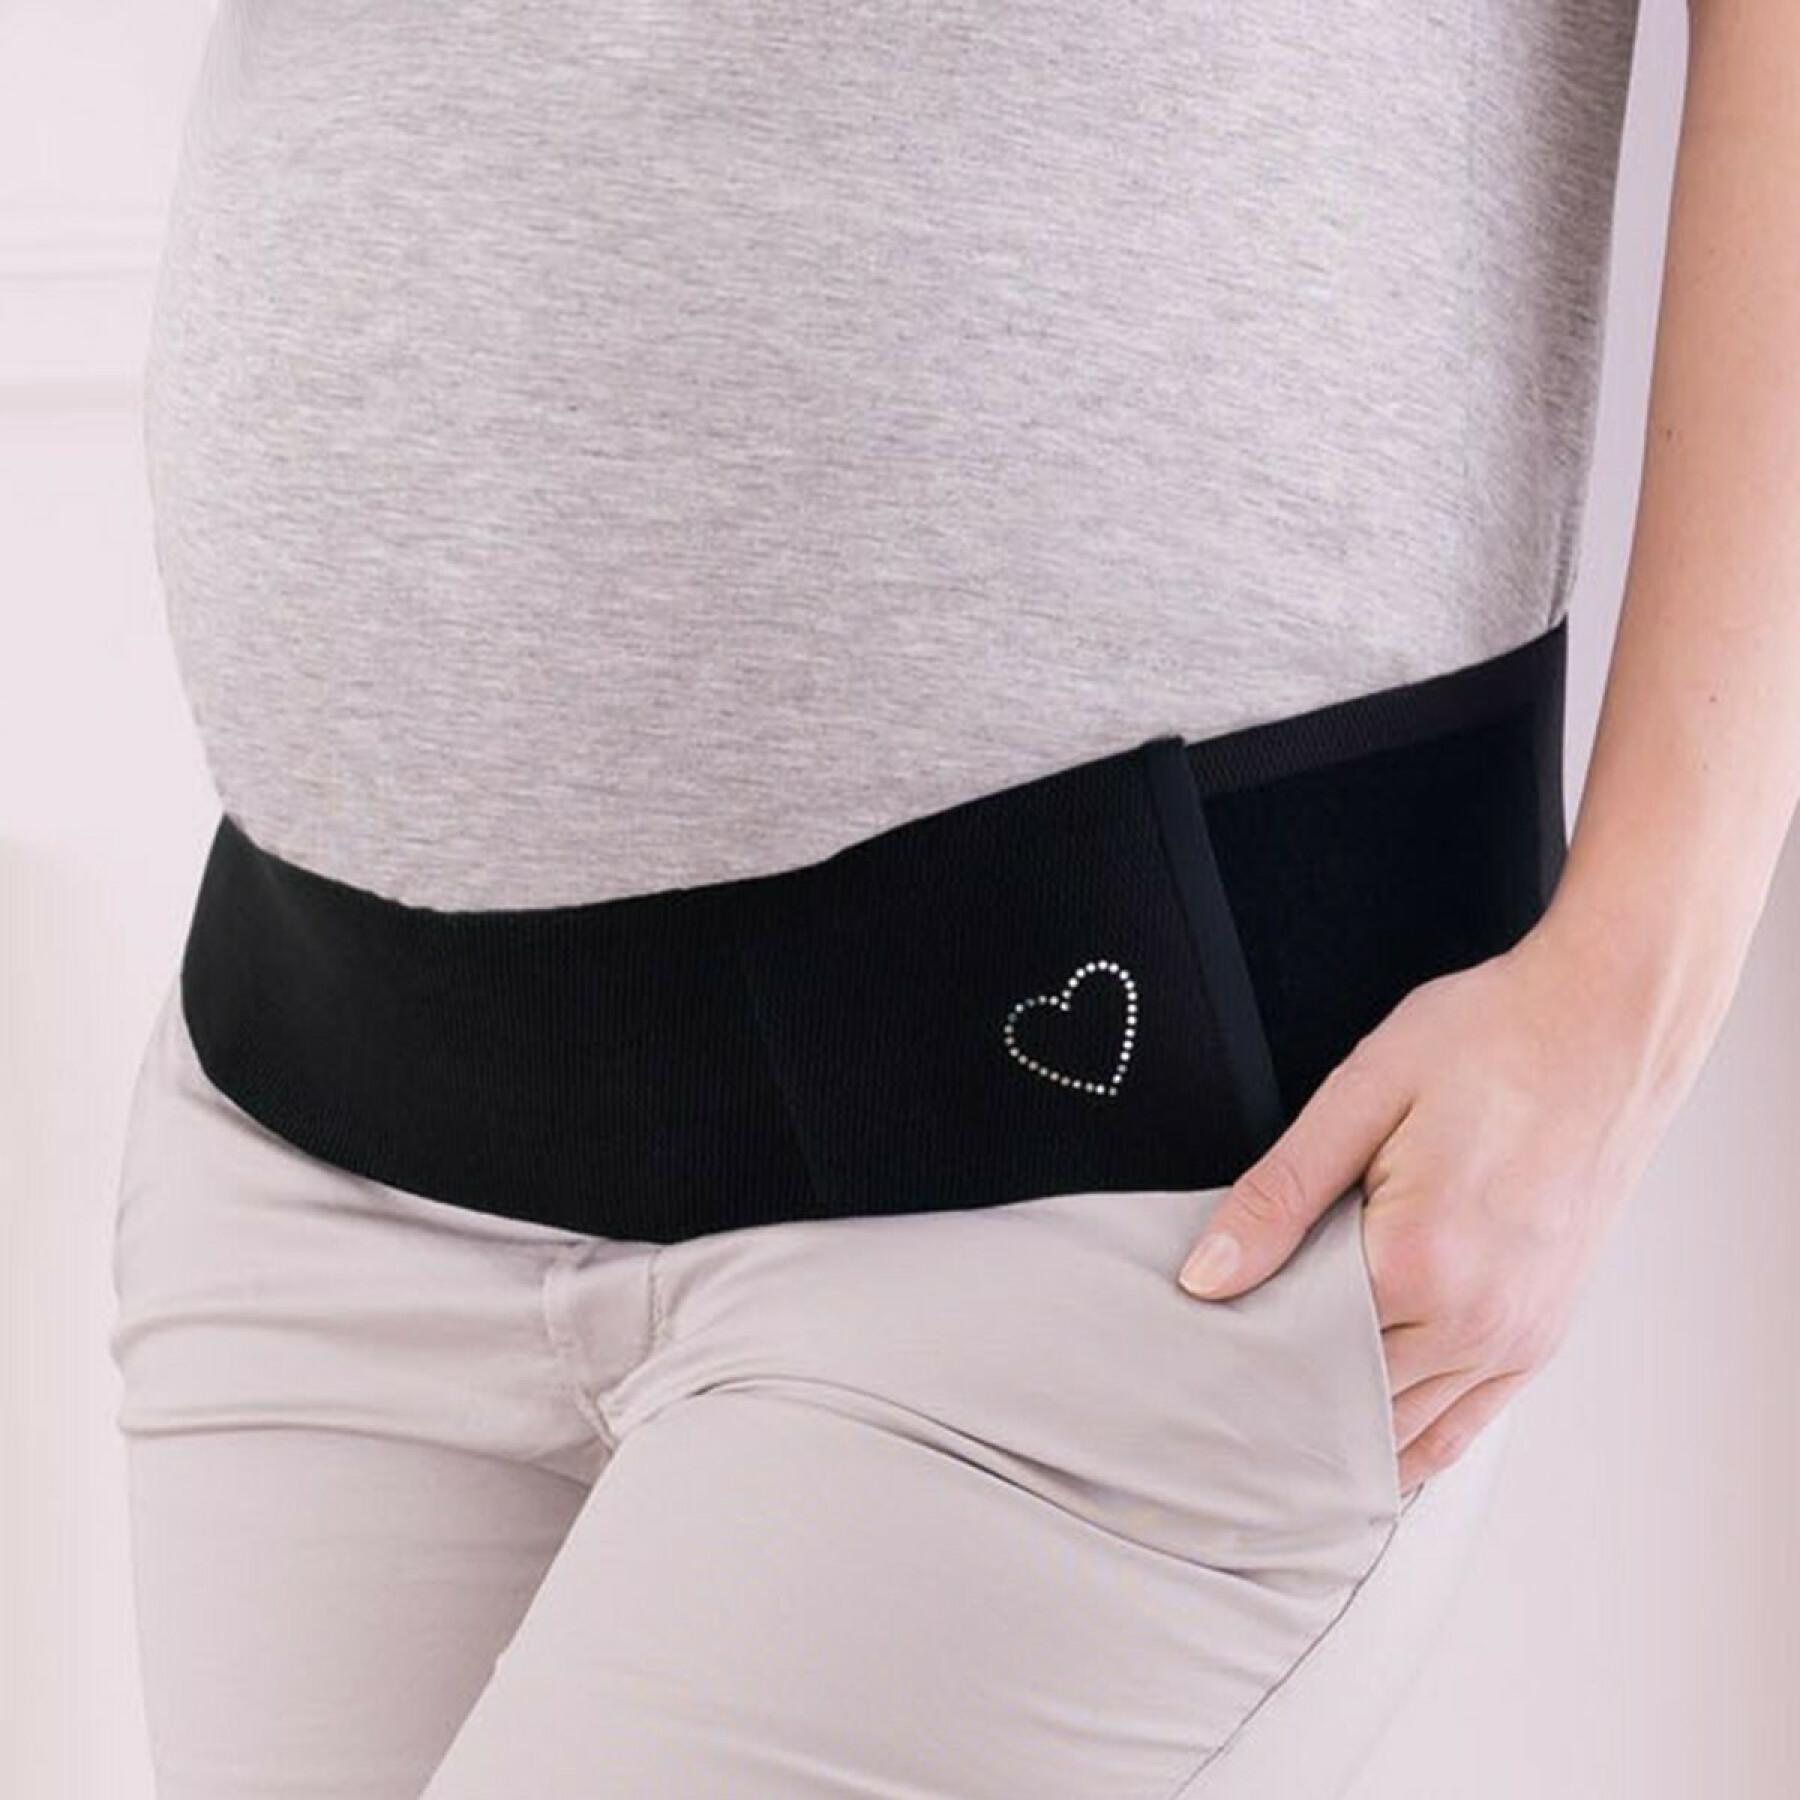 Women's pregnancy belt Anita babySherpa